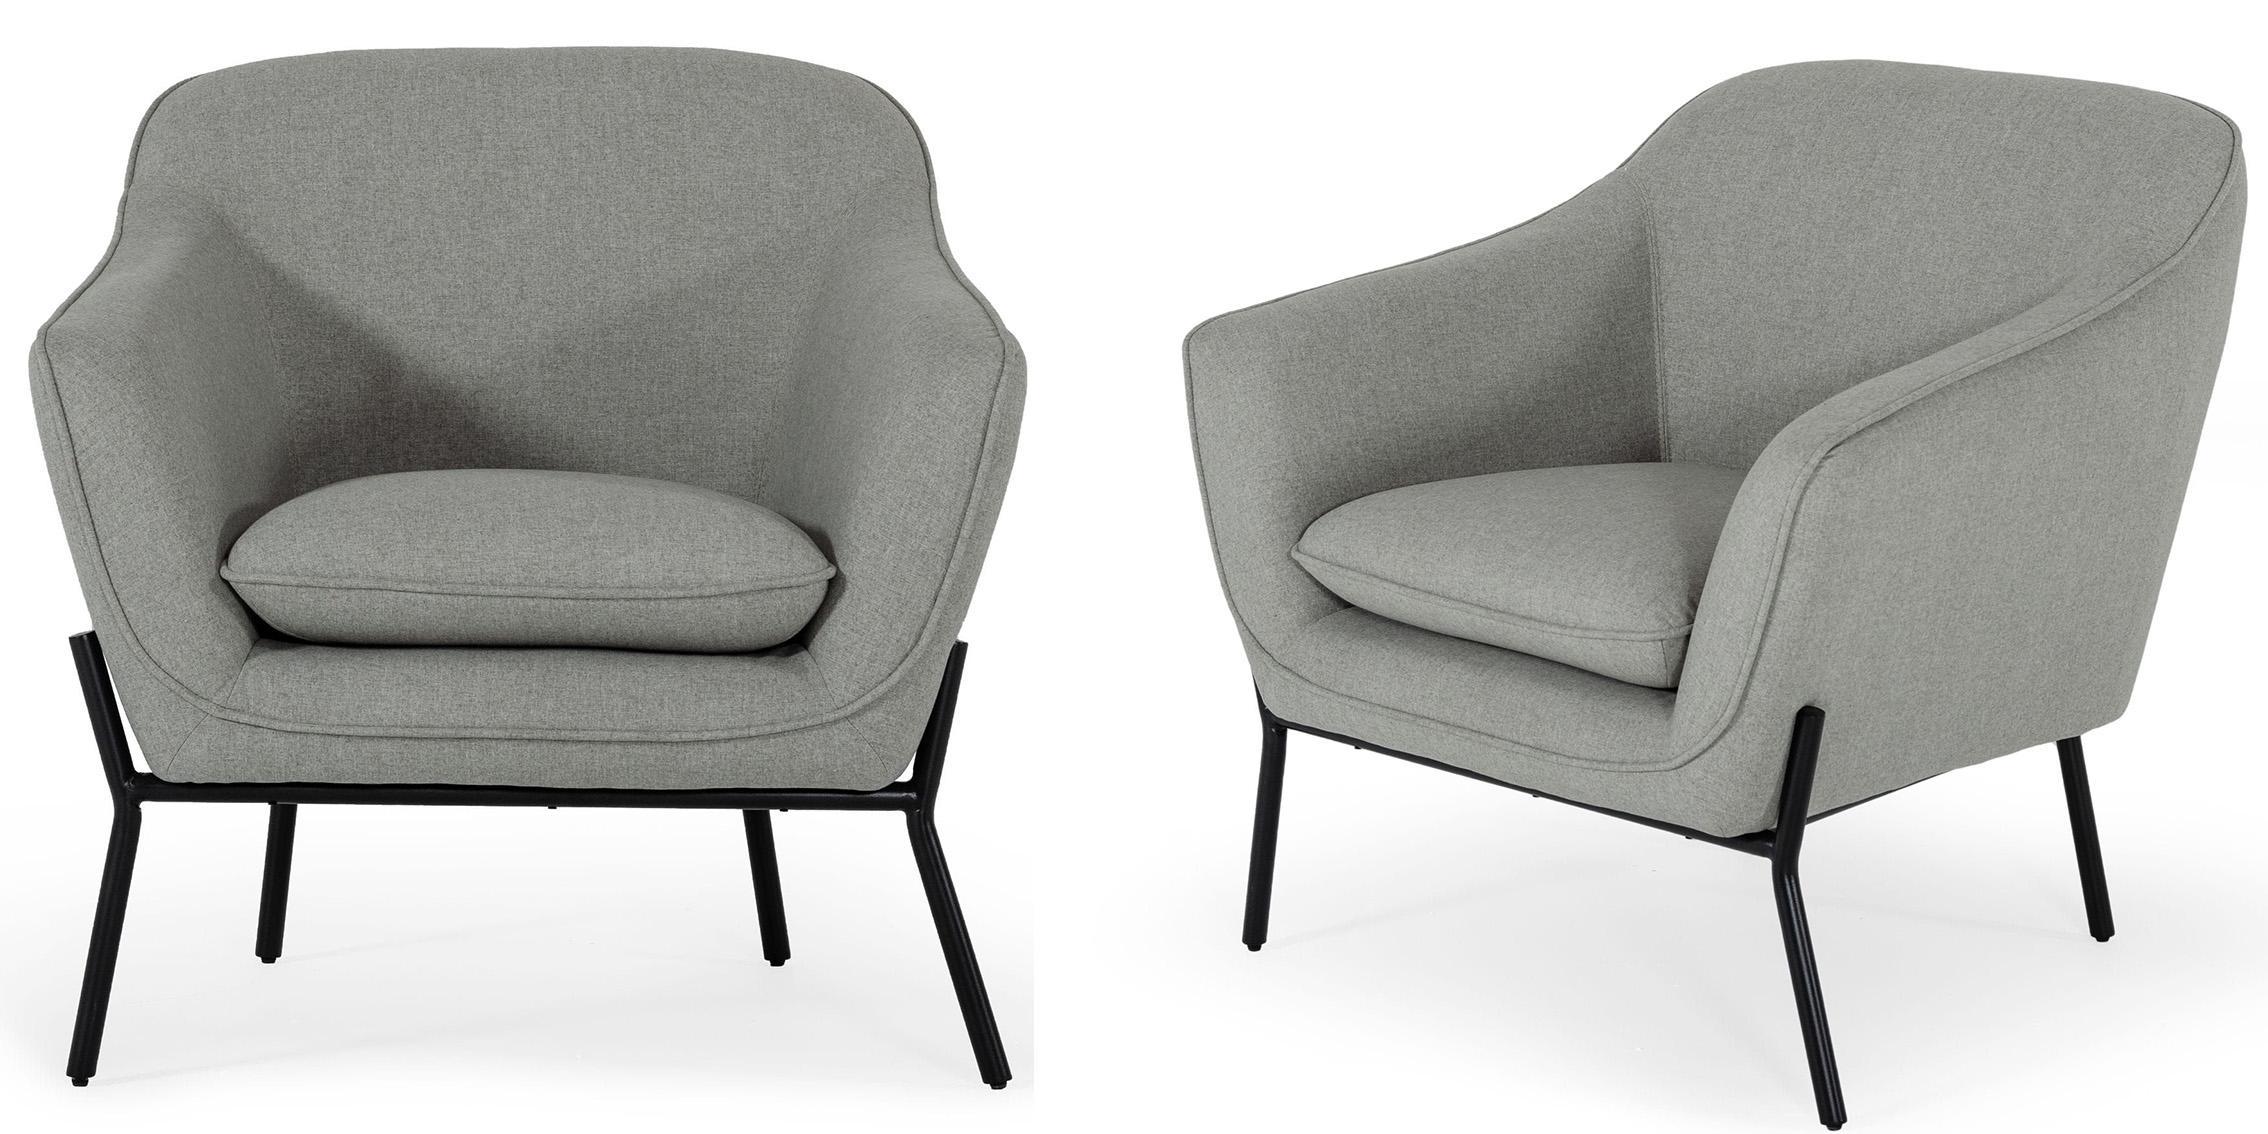 Contemporary, Modern Arm Chair Set VGUIMY431-GREY-Set-2 VGUIMY431-GREY-Set-2 in Light Grey Velvet